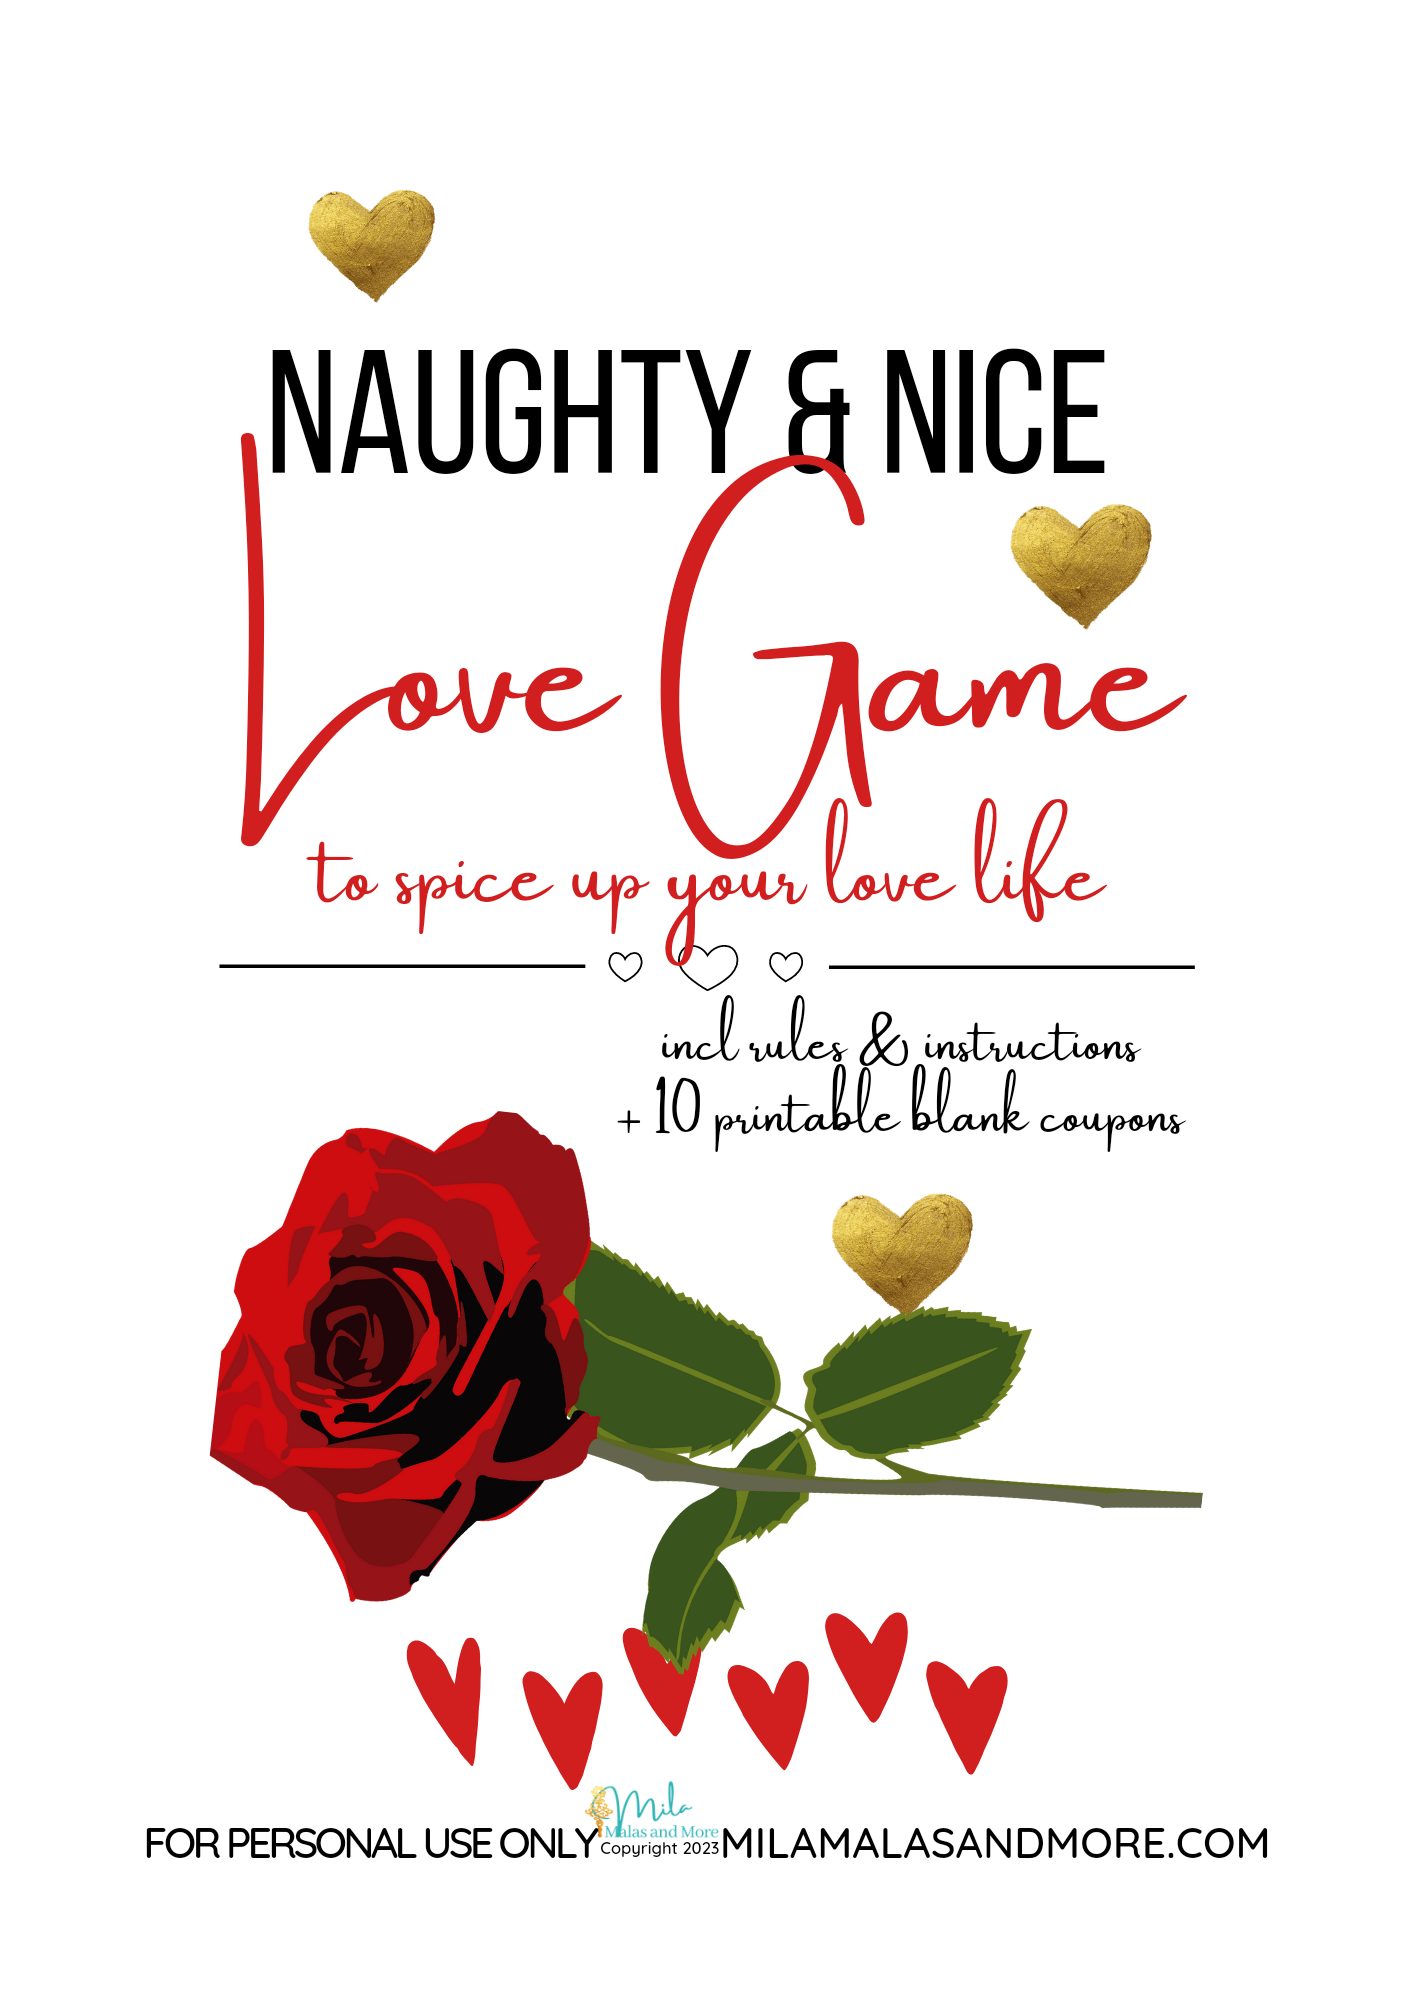 NAUGHTY AND NICE LOVE GAME